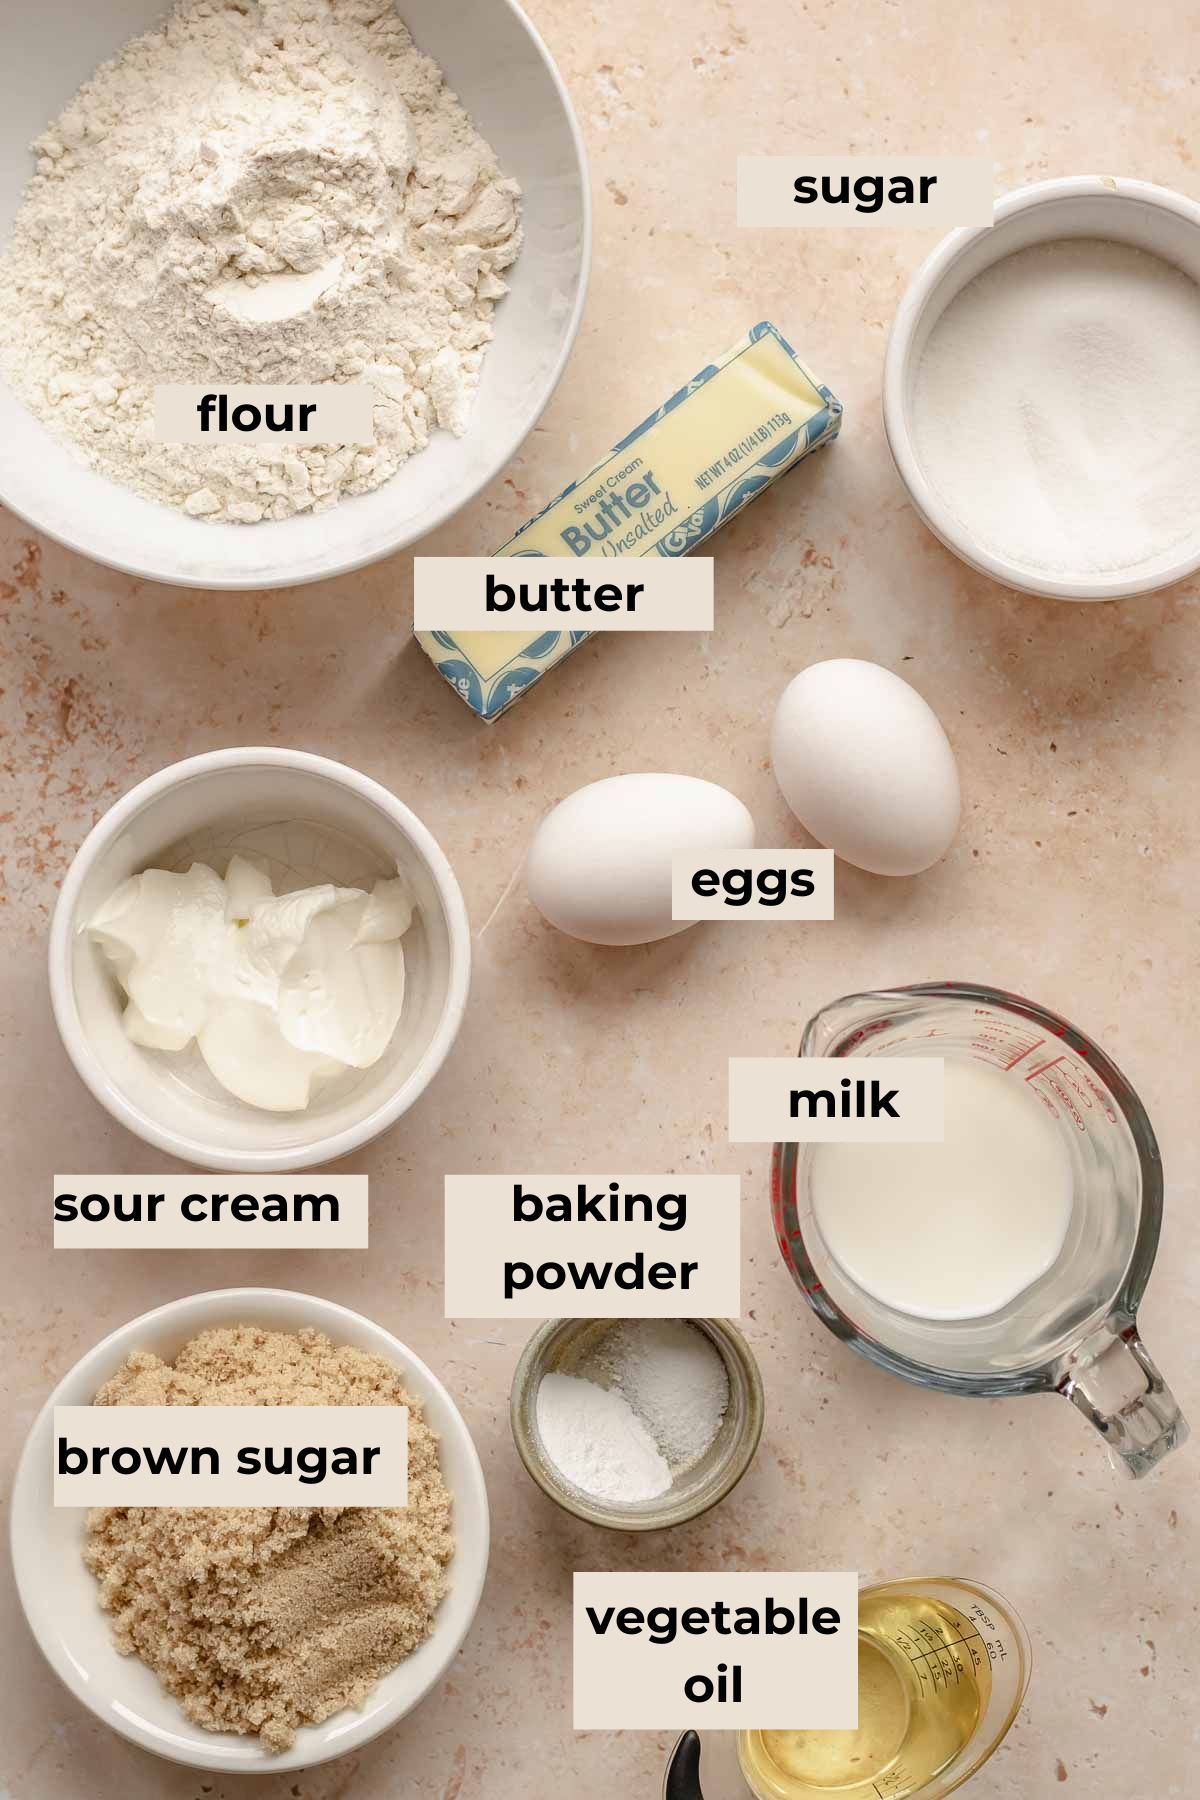 Ingredients for rhubarb crumble cake.